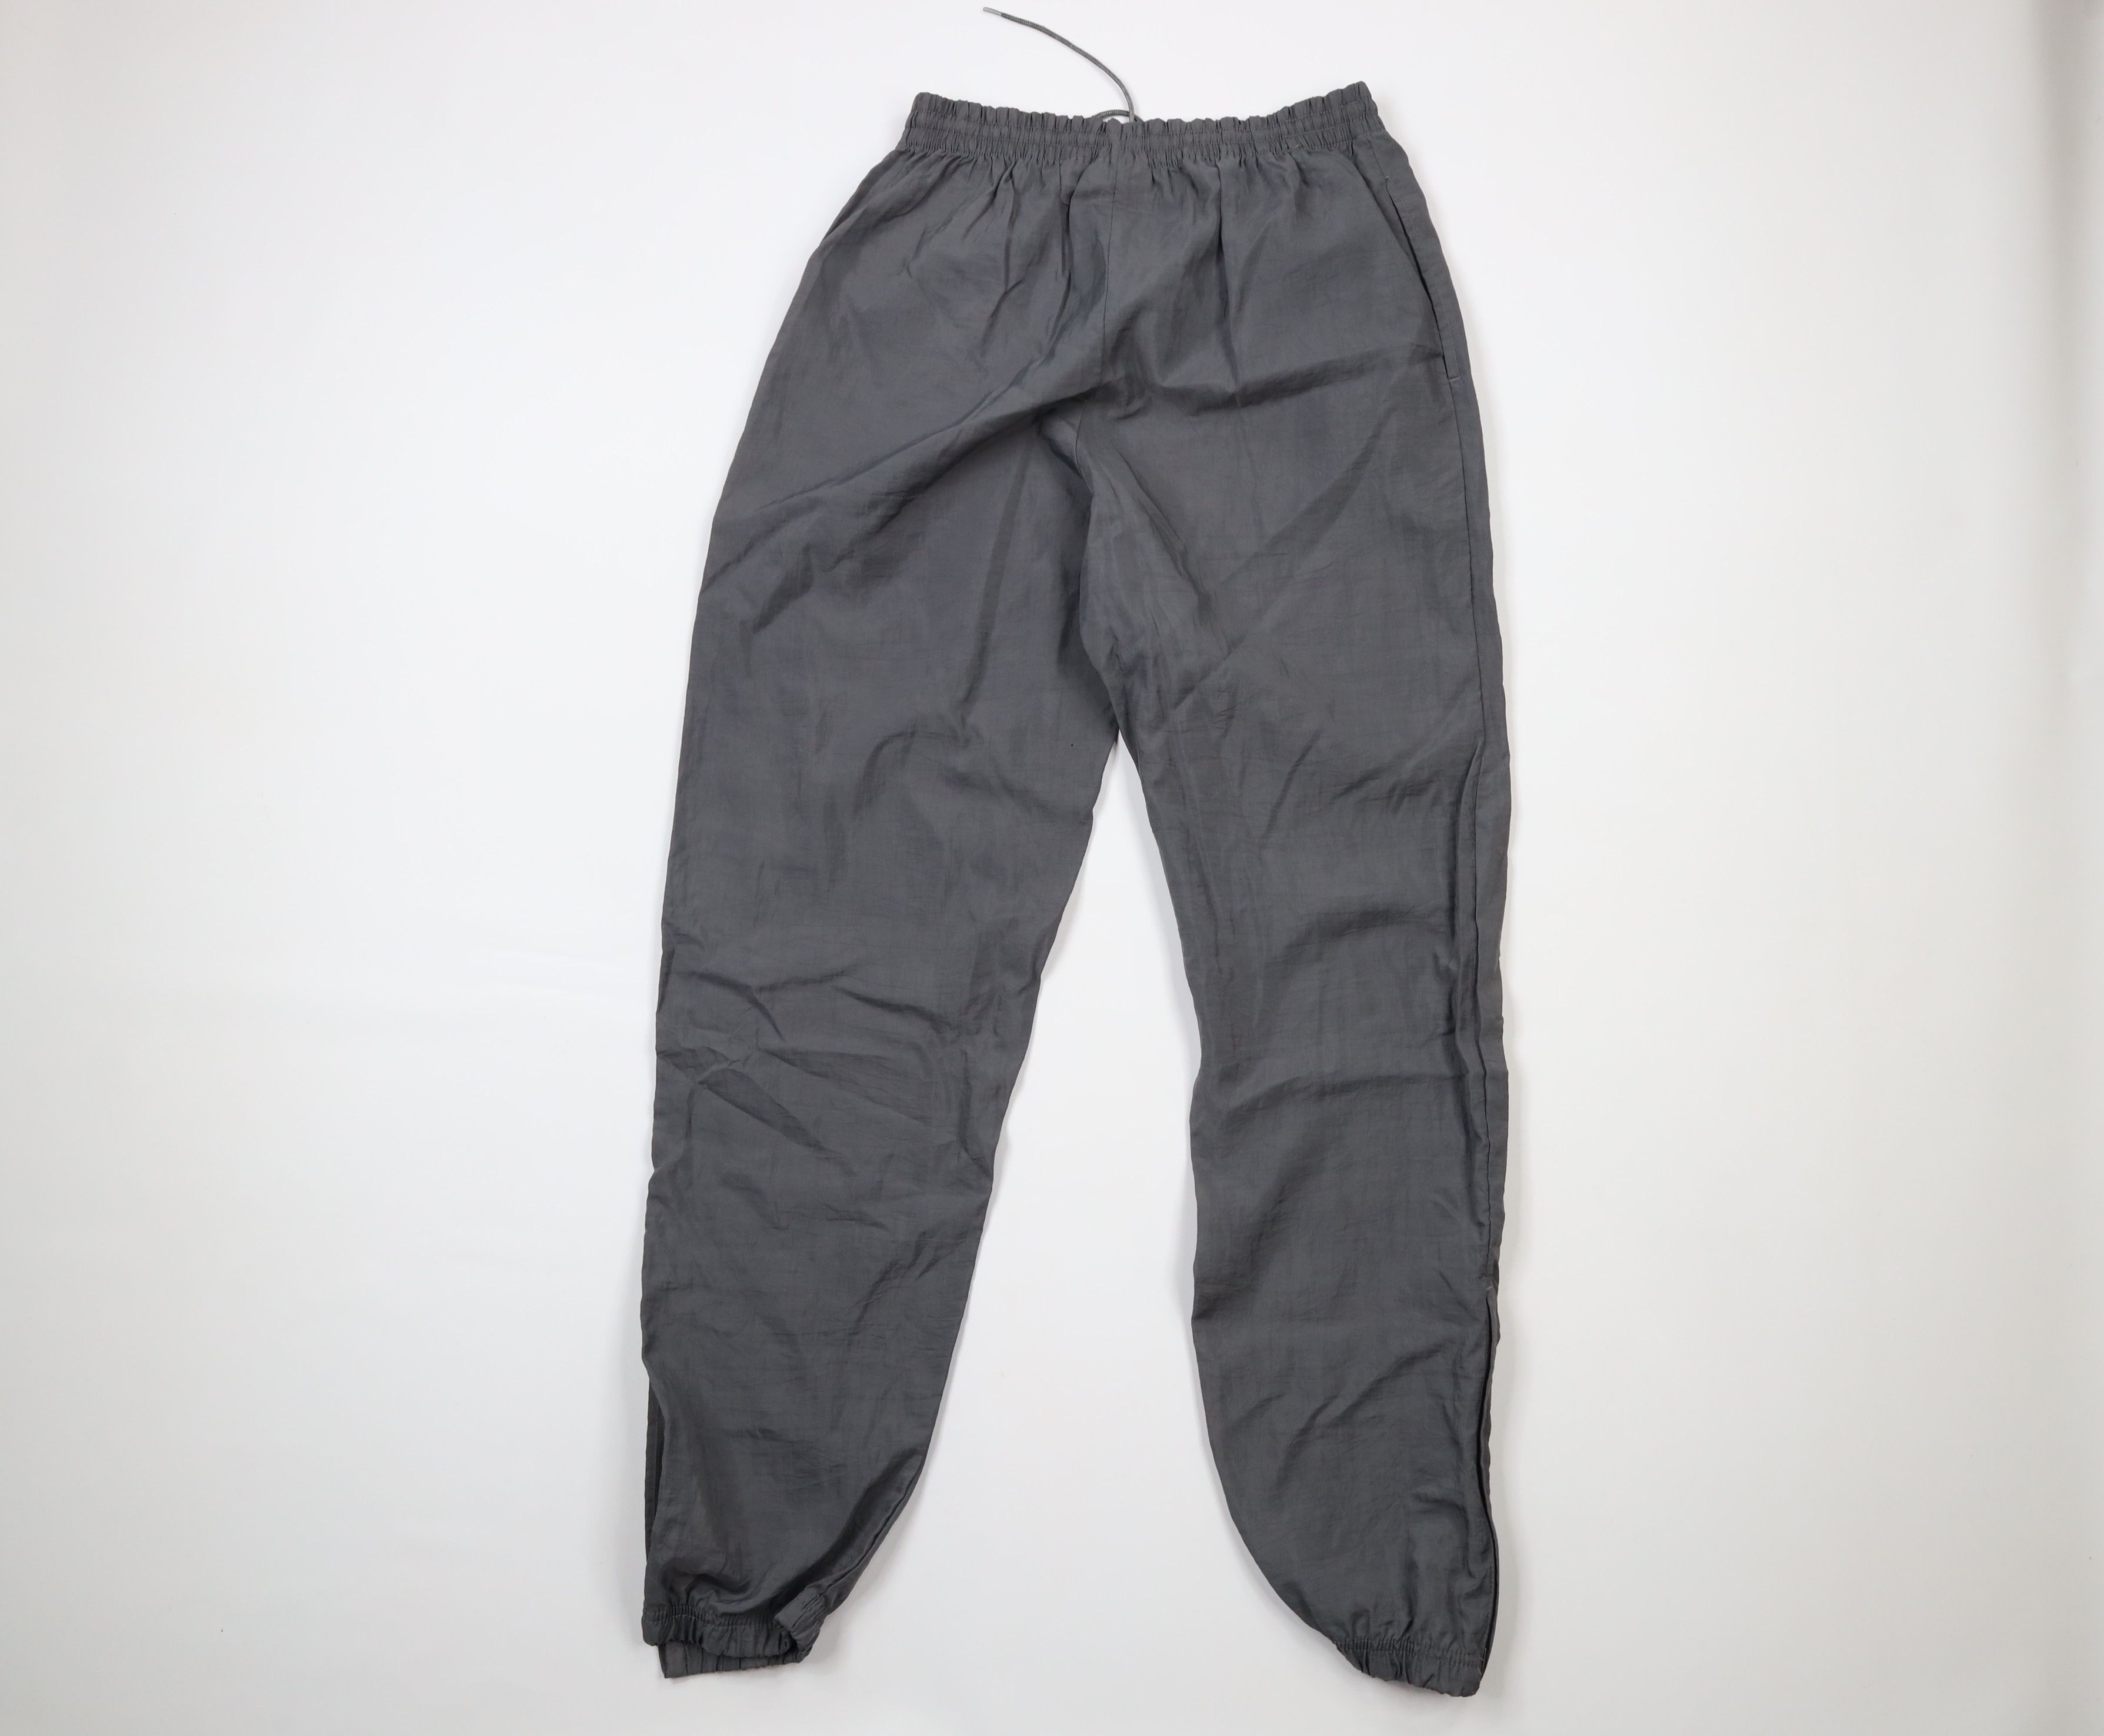 Vintage Vintage 90s Reebok Cuffed Nylon Joggers Jogger Pants Gray Size US 34 / EU 50 - 9 Thumbnail